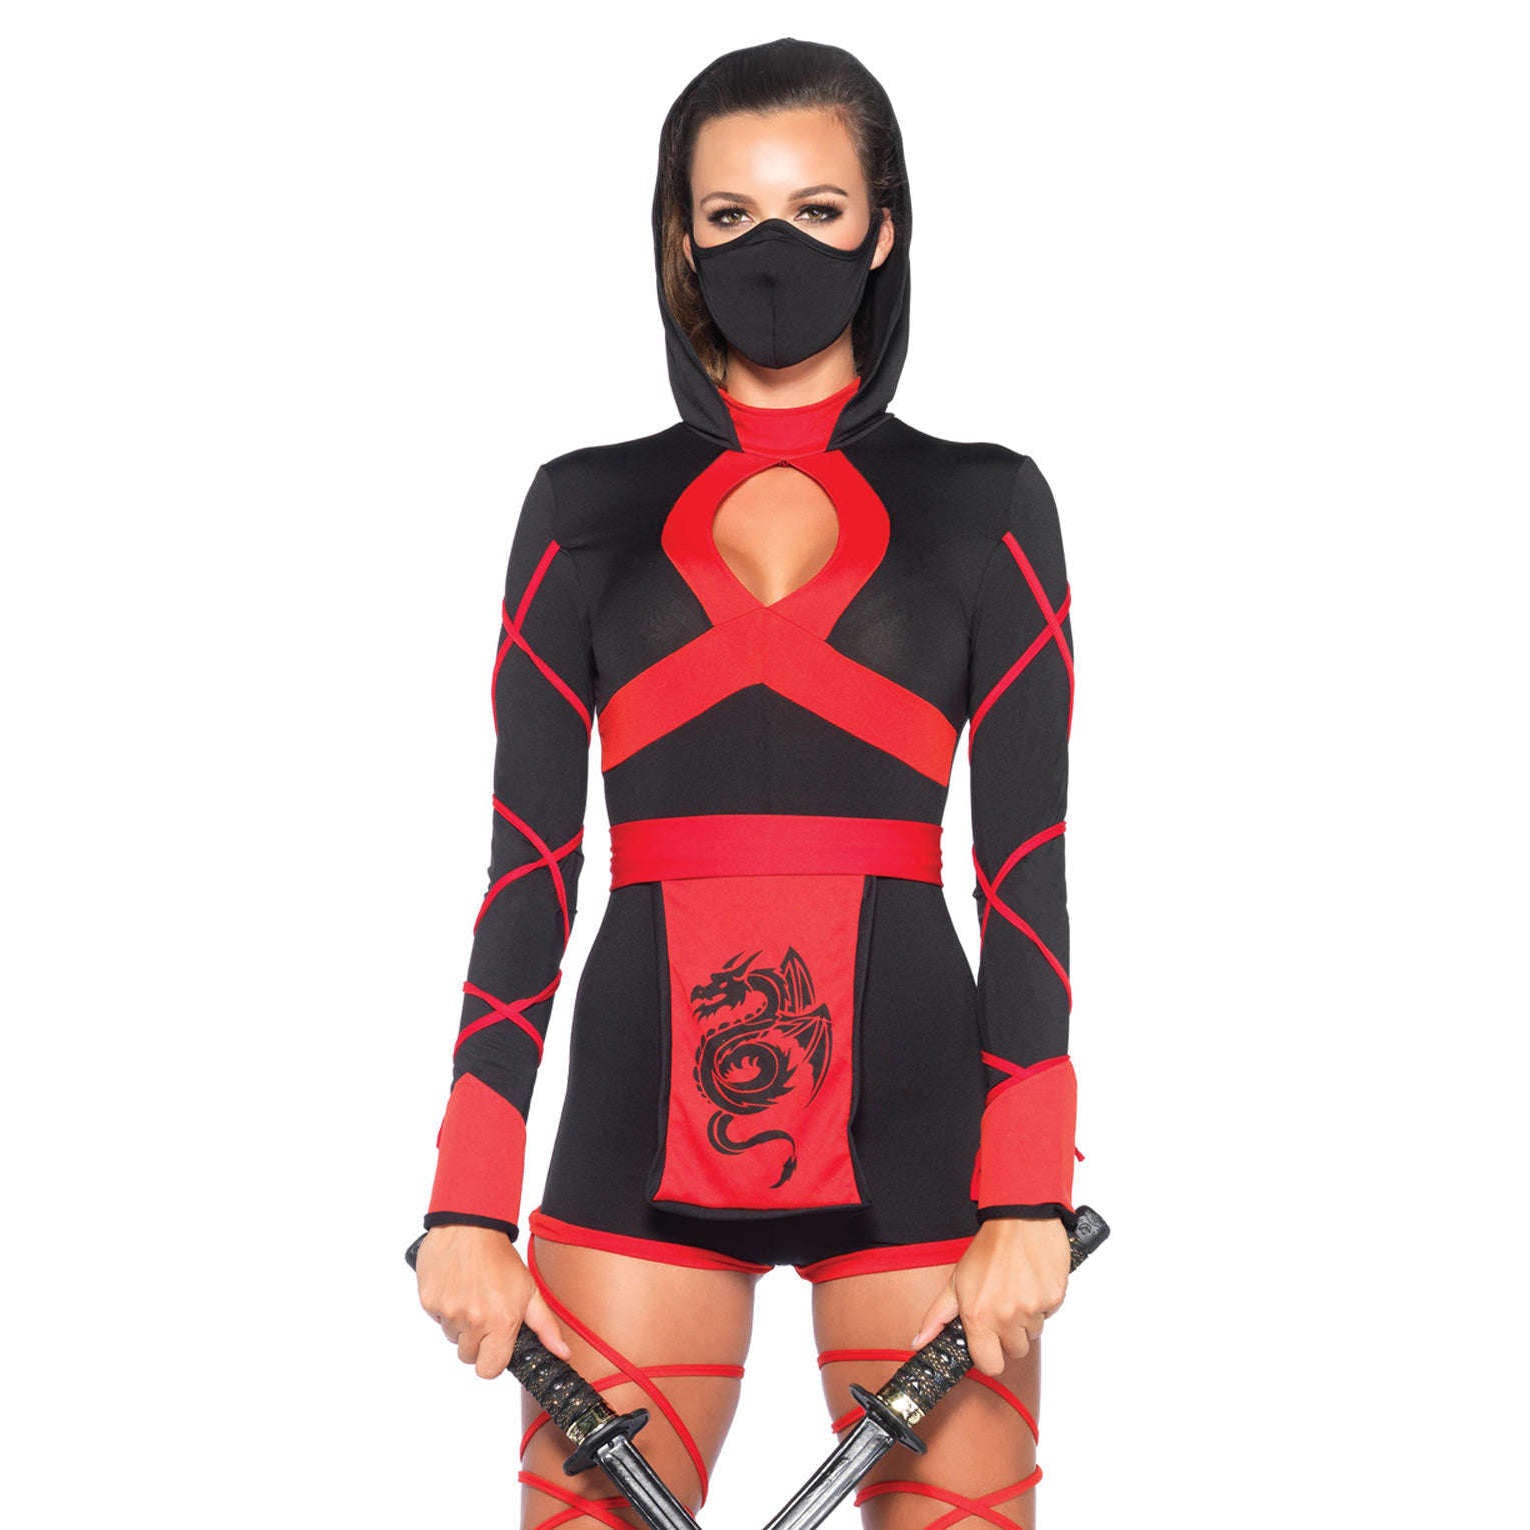 Plus Size Stealth Ninja Women's Costume